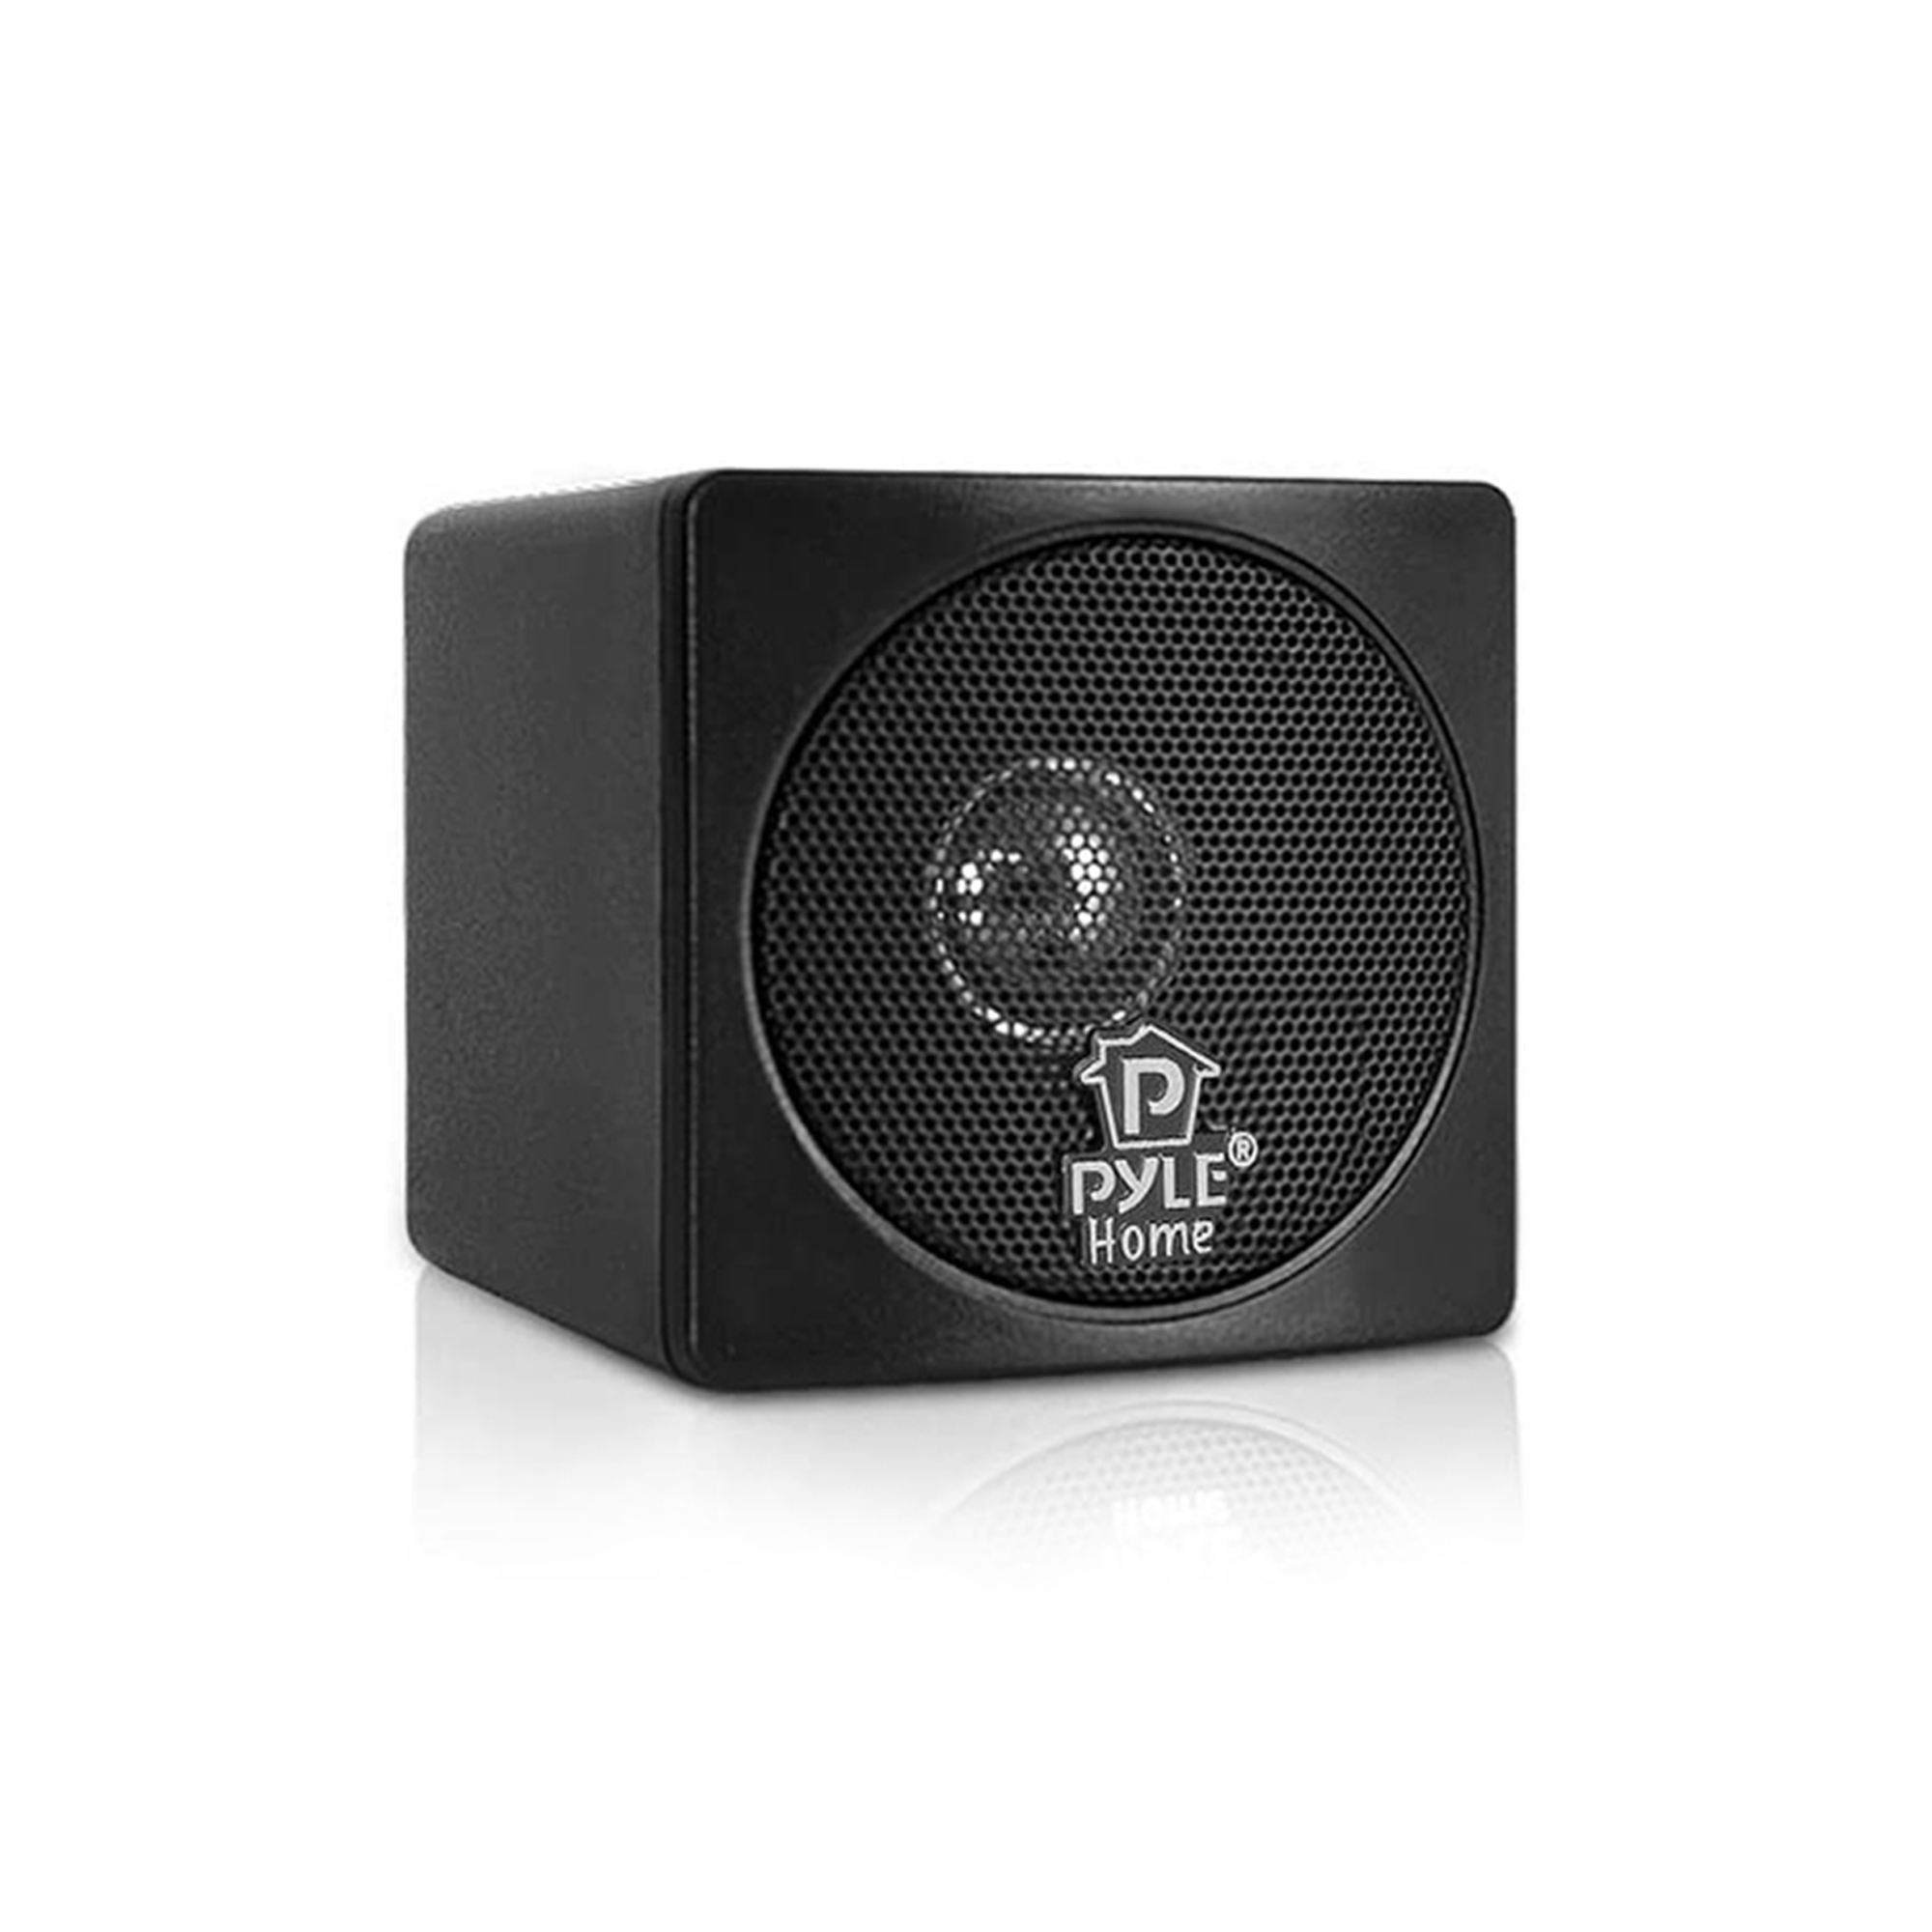 Pyle PCB3BK 3 Inch 100W Mini Cube Bookshelf Stereo Speakers, Black (4 Speakers) - image 2 of 5